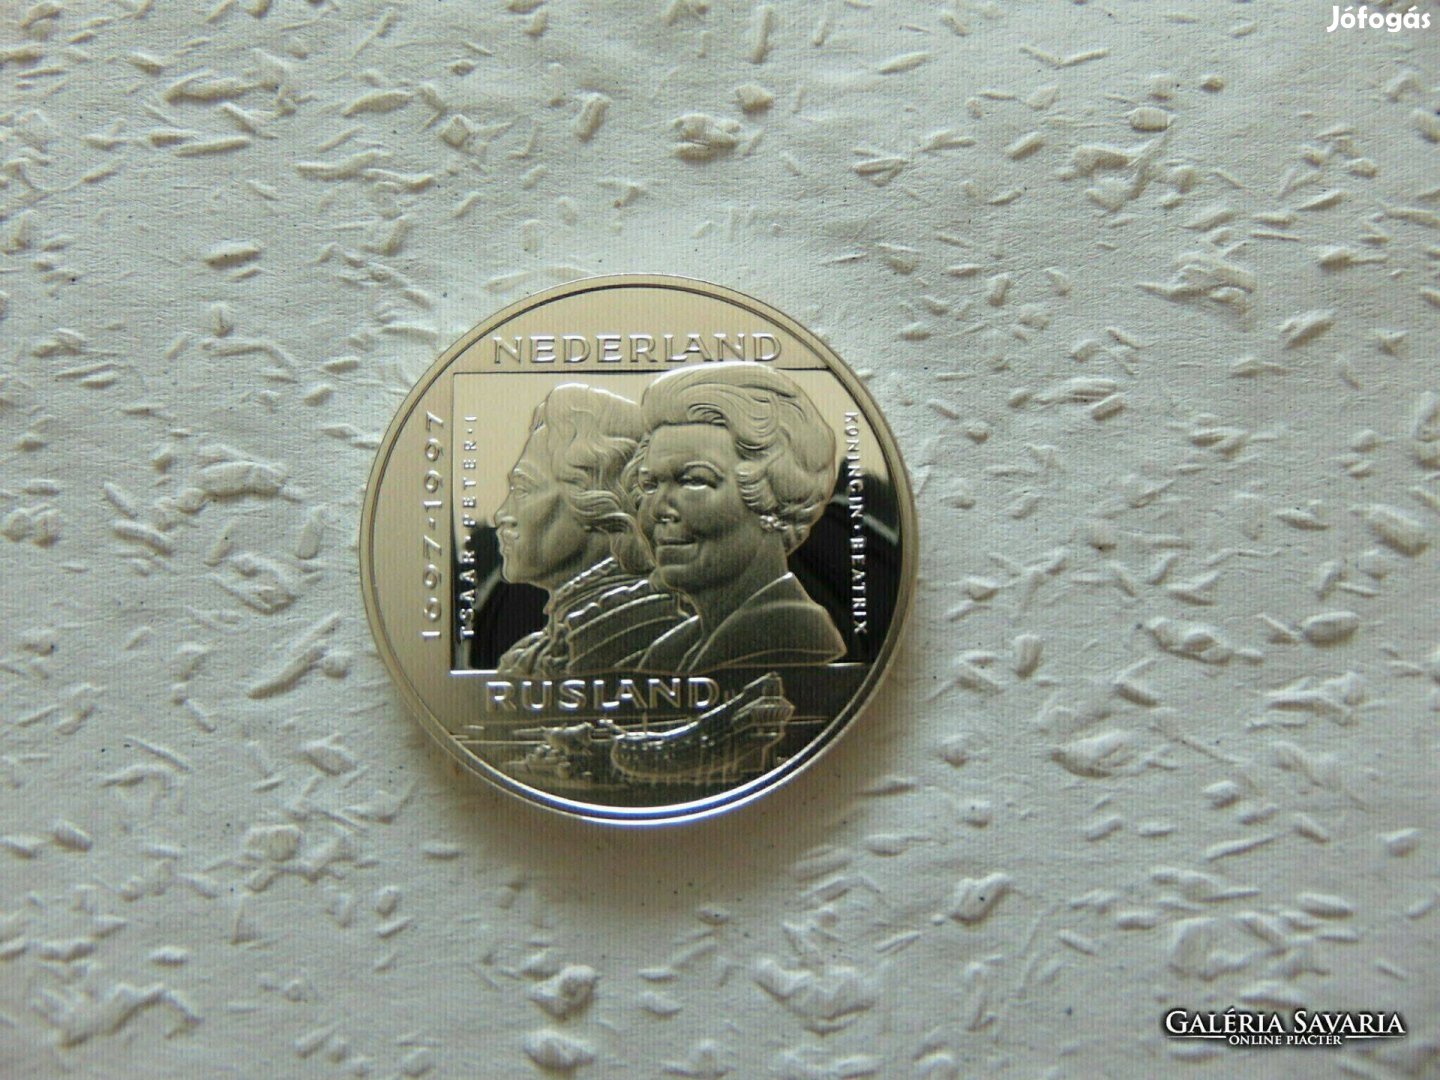 Hollandia ezüst 25 ecu 1997 PP 25.16 gramm